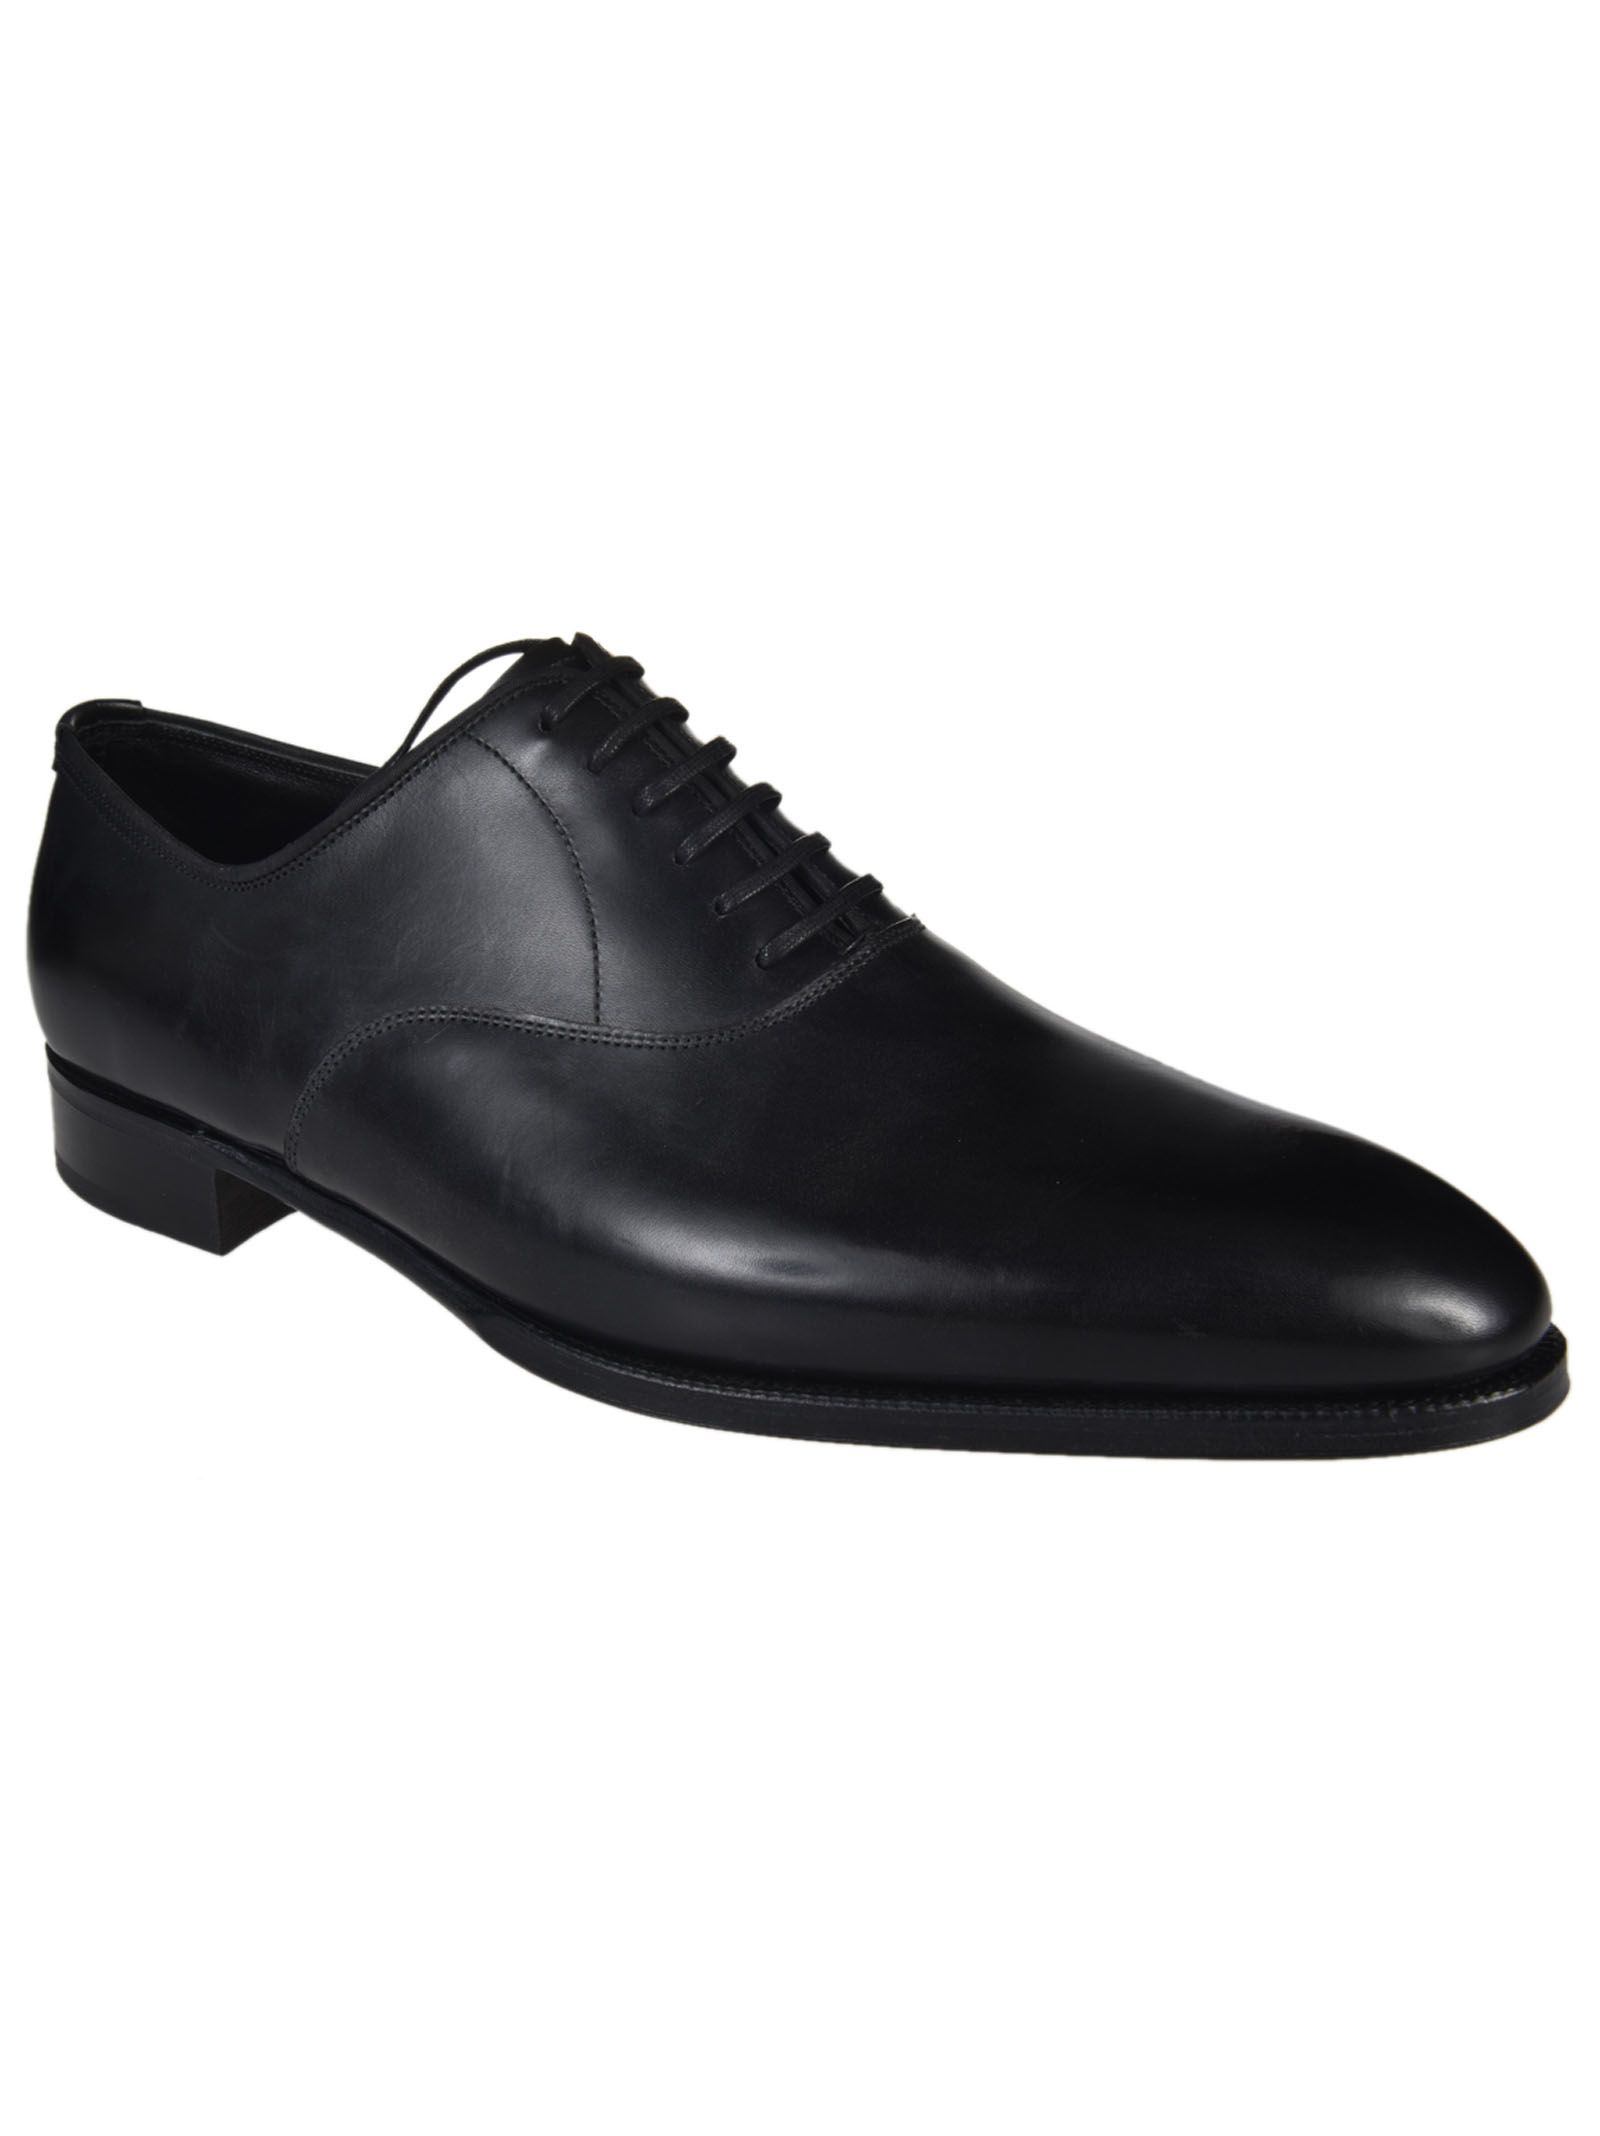 John Lobb - John Lobb Garnier II Oxford Shoes - Black, Men's Laced ...